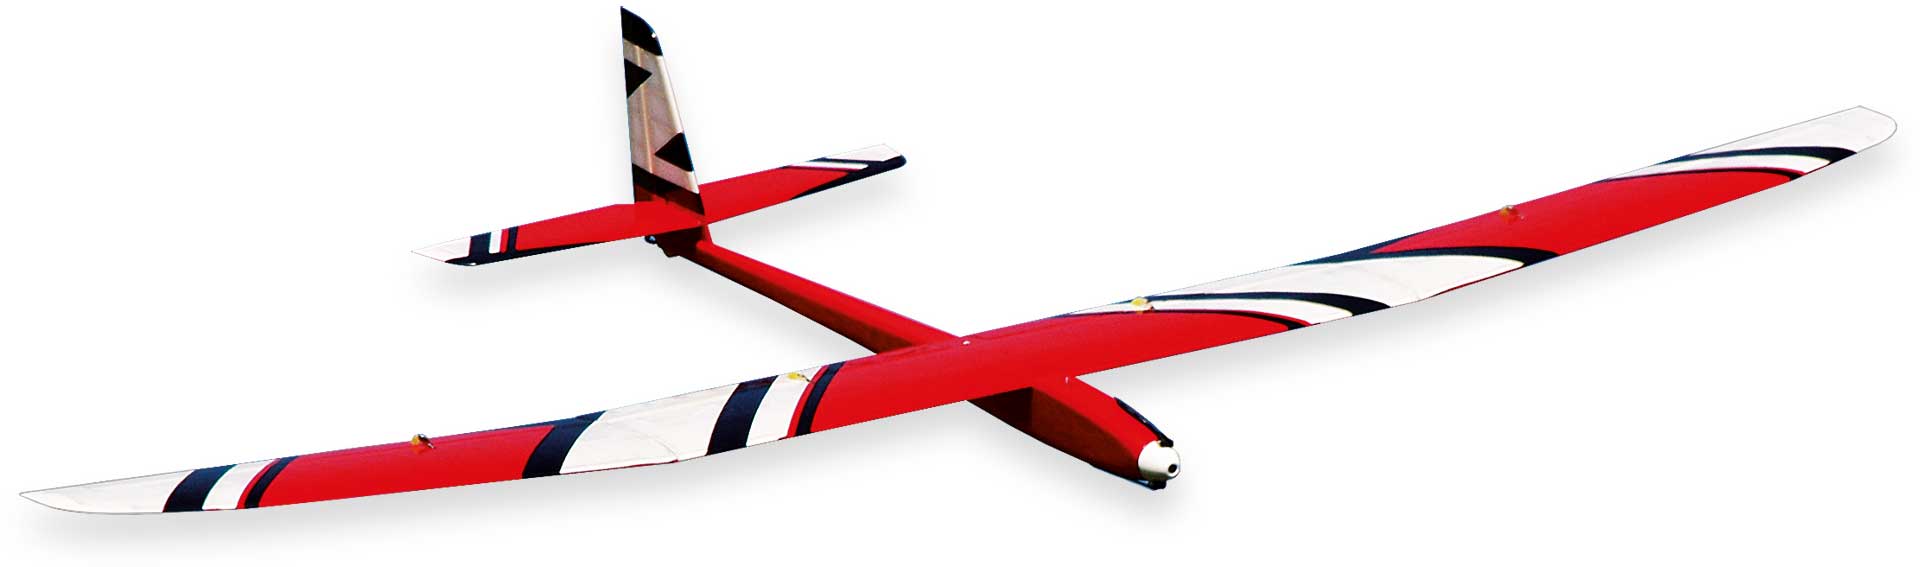 Robbe Modellsport Slider Q High Performance 4-Flap Wing Electric Glider